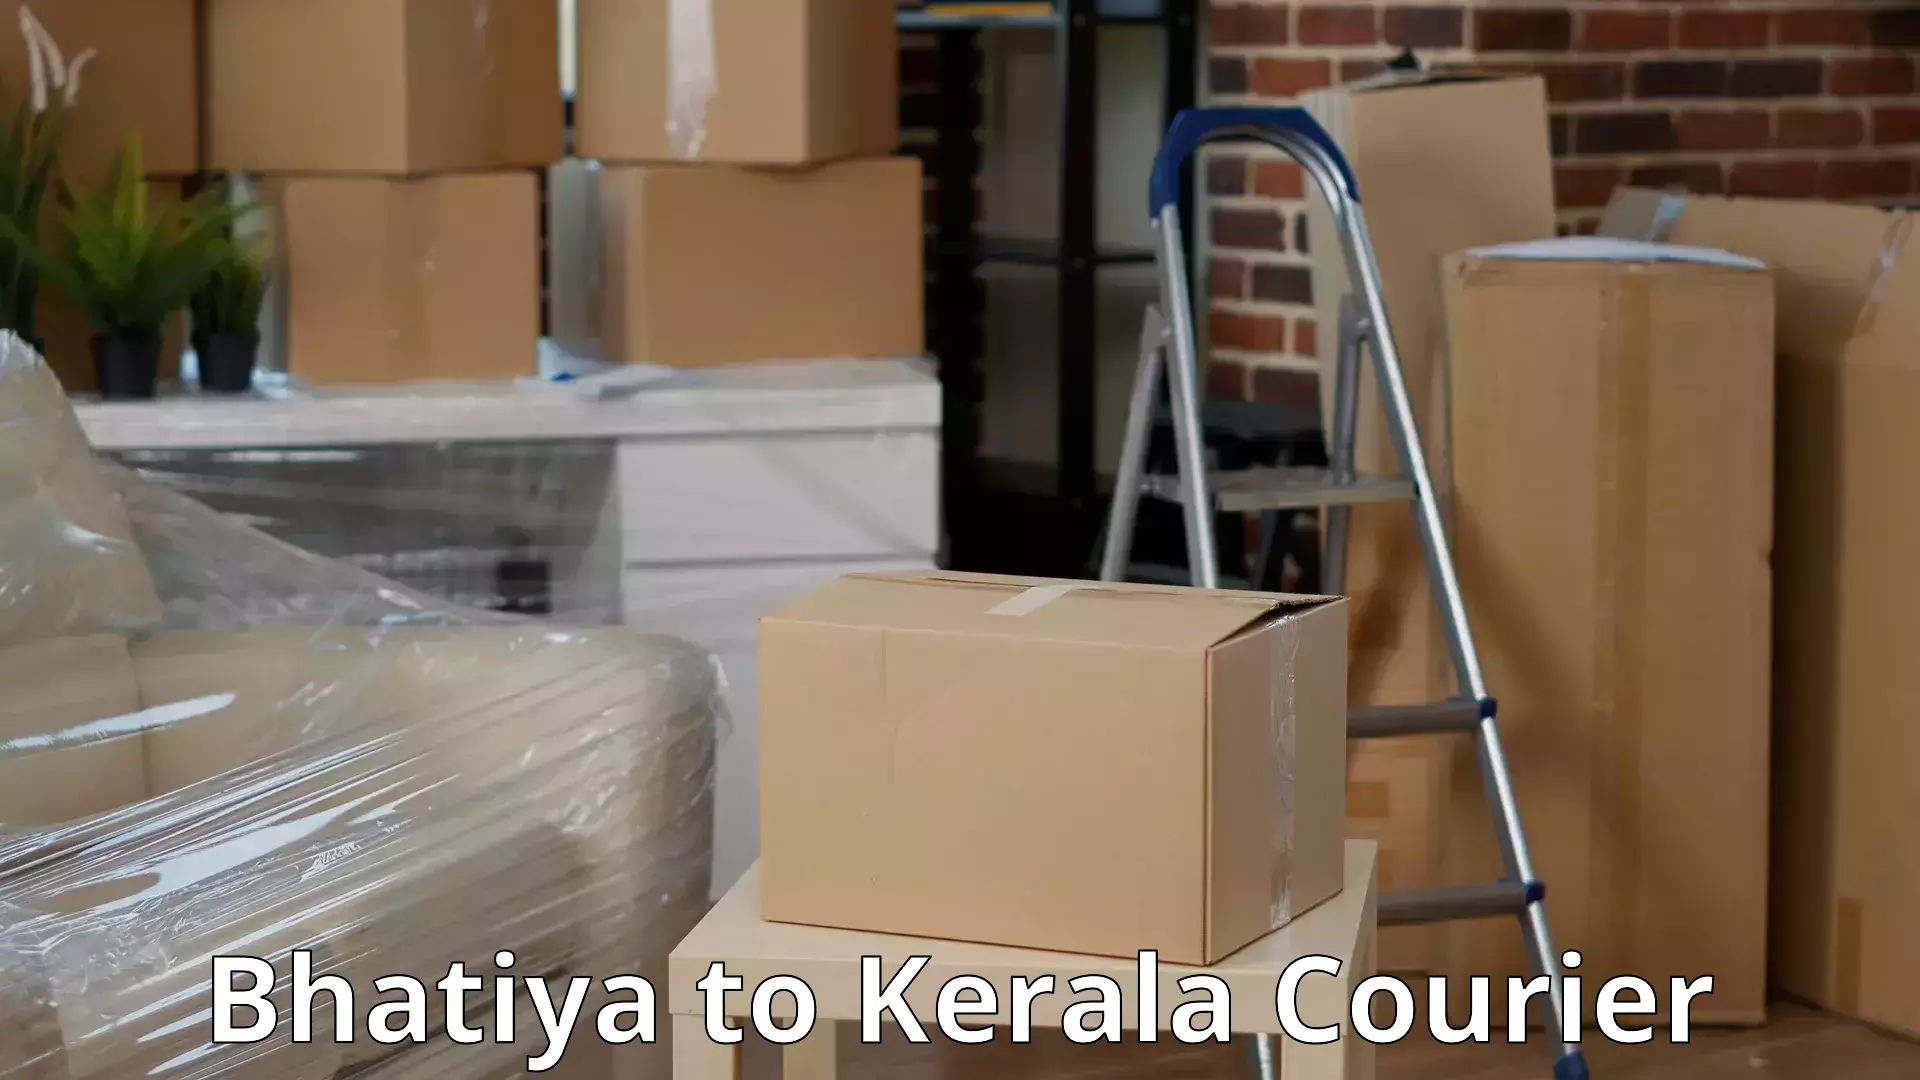 Efficient moving company Bhatiya to Kochi